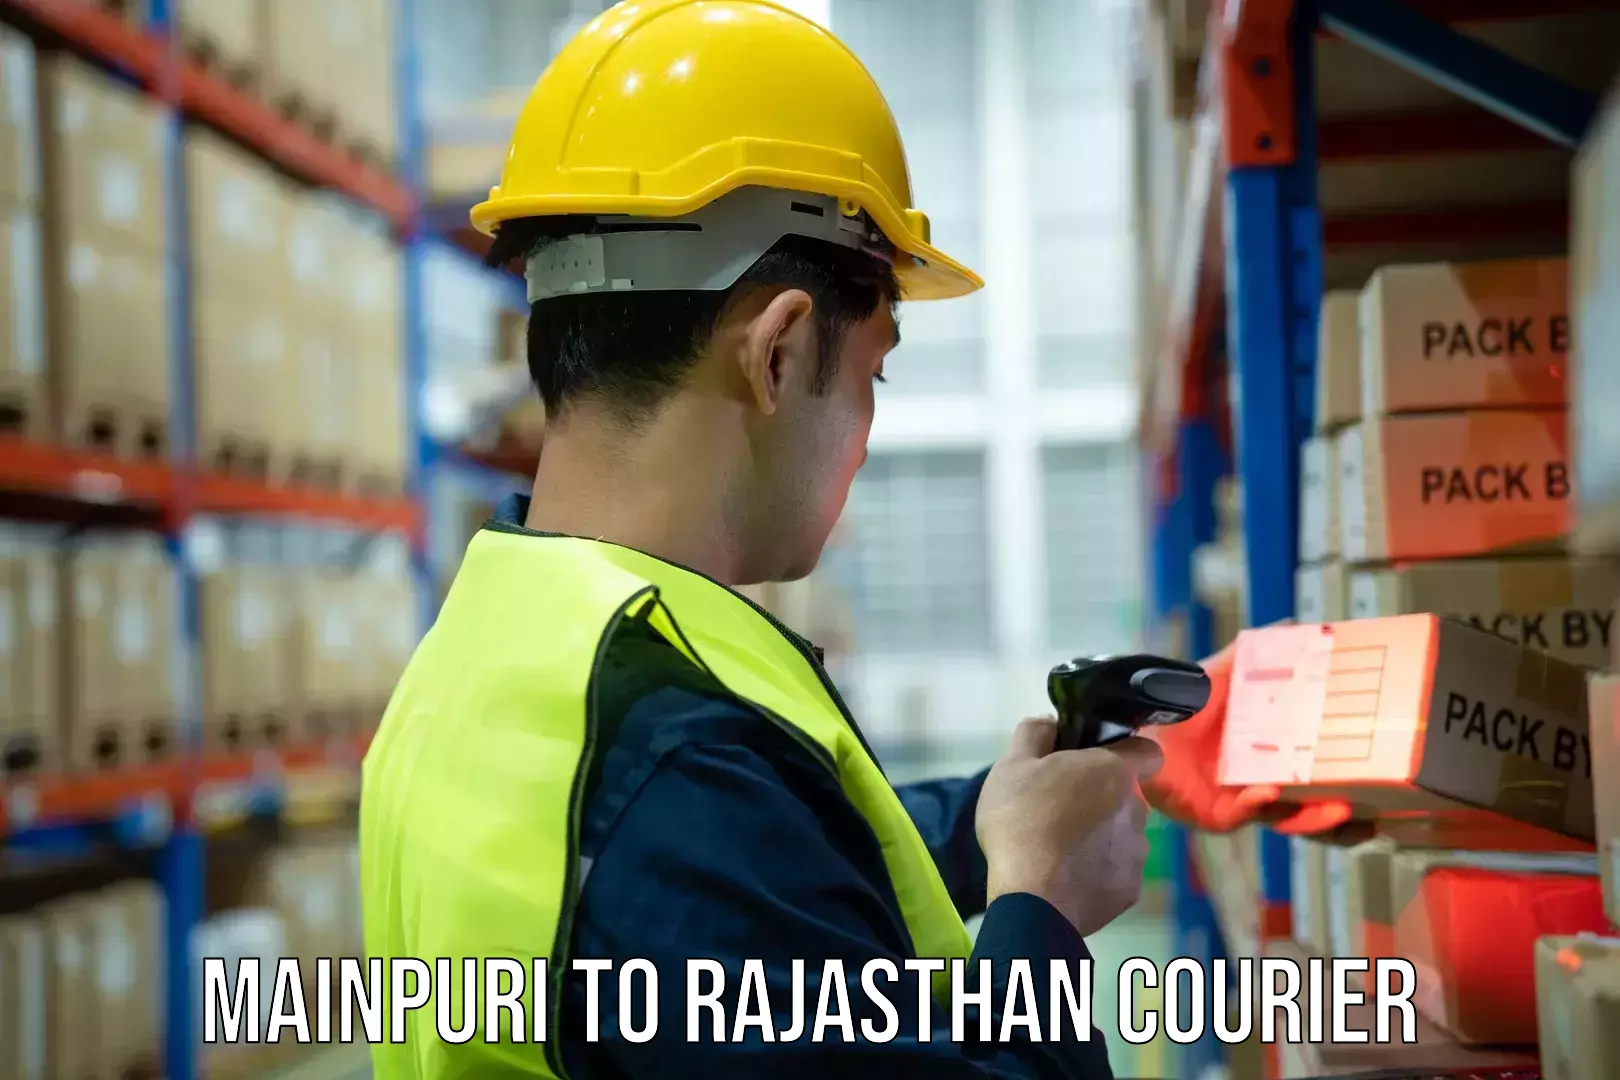 Doorstep delivery service Mainpuri to Rajasthan